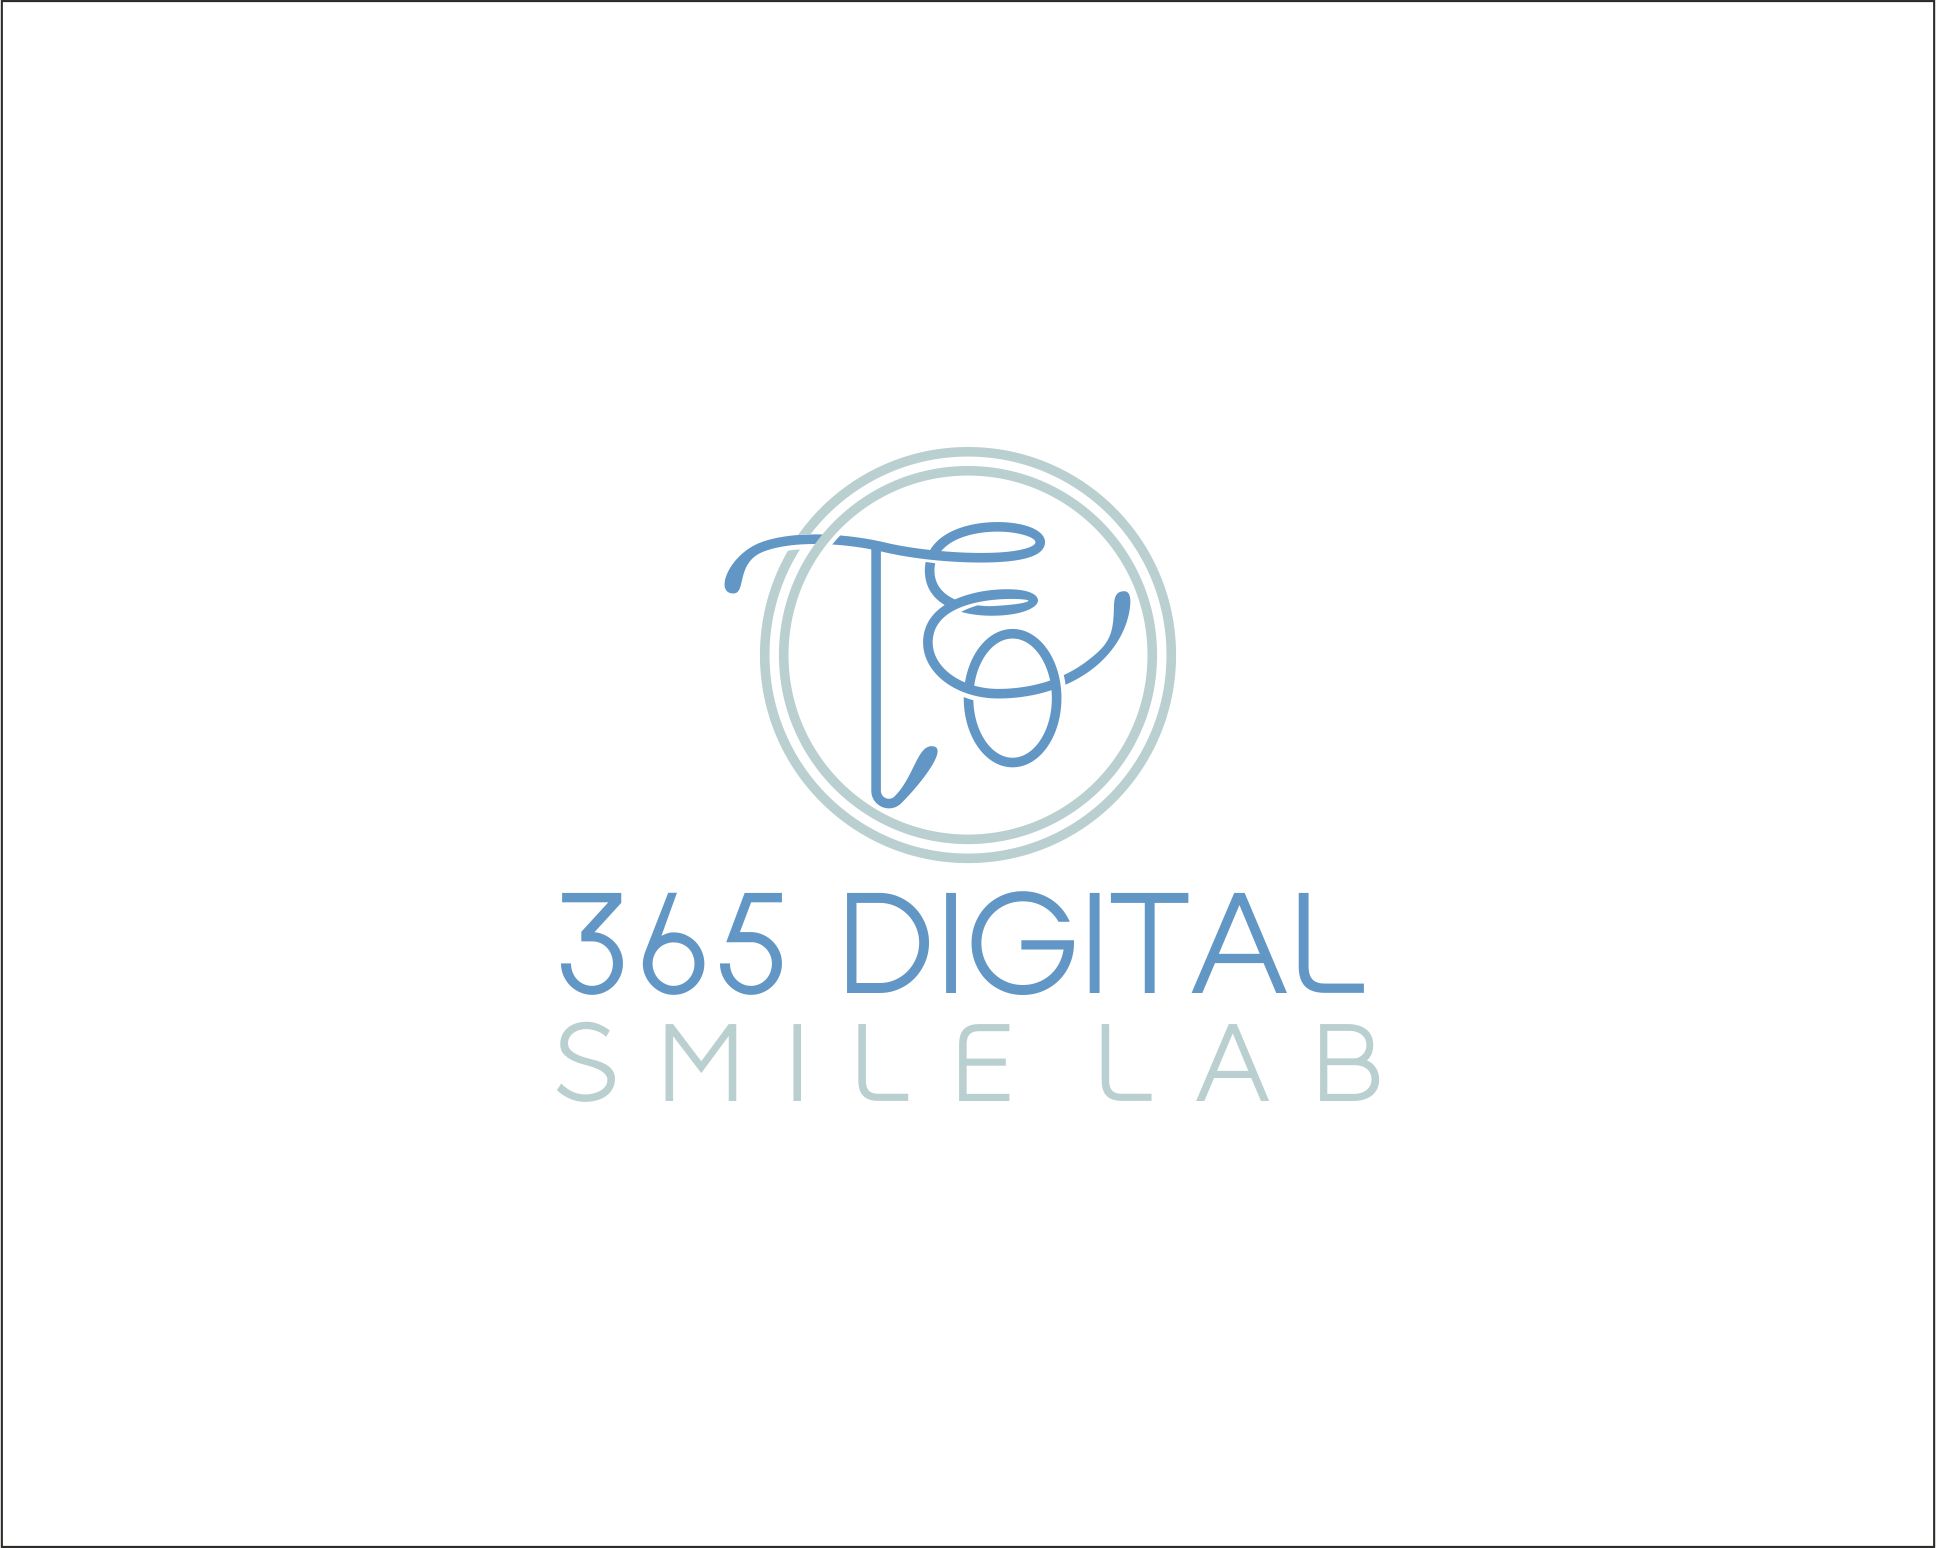 Logo Design entry 1585894 submitted by jangAbayz to the Logo Design for 365 Digital Smile Lab run by kimberly@atlantadentalspa.com